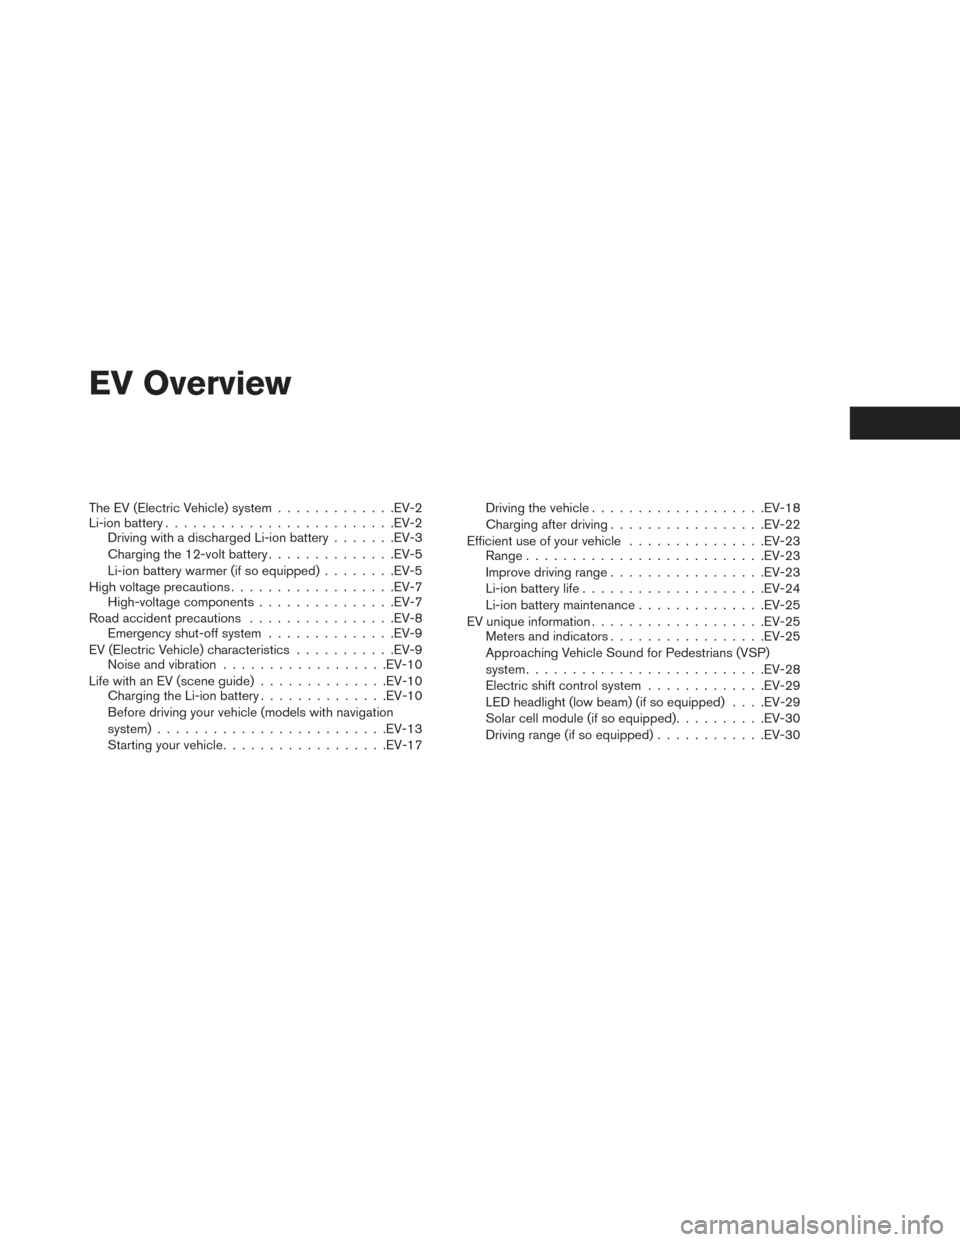 NISSAN LEAF 2016 1.G User Guide EV Overview
The EV (Electric Vehicle) system.............EV-2
Li-ion battery ........................ .EV-2
Driving with a discharged Li-ion battery .......EV-3
Charging the 12-volt battery ..........